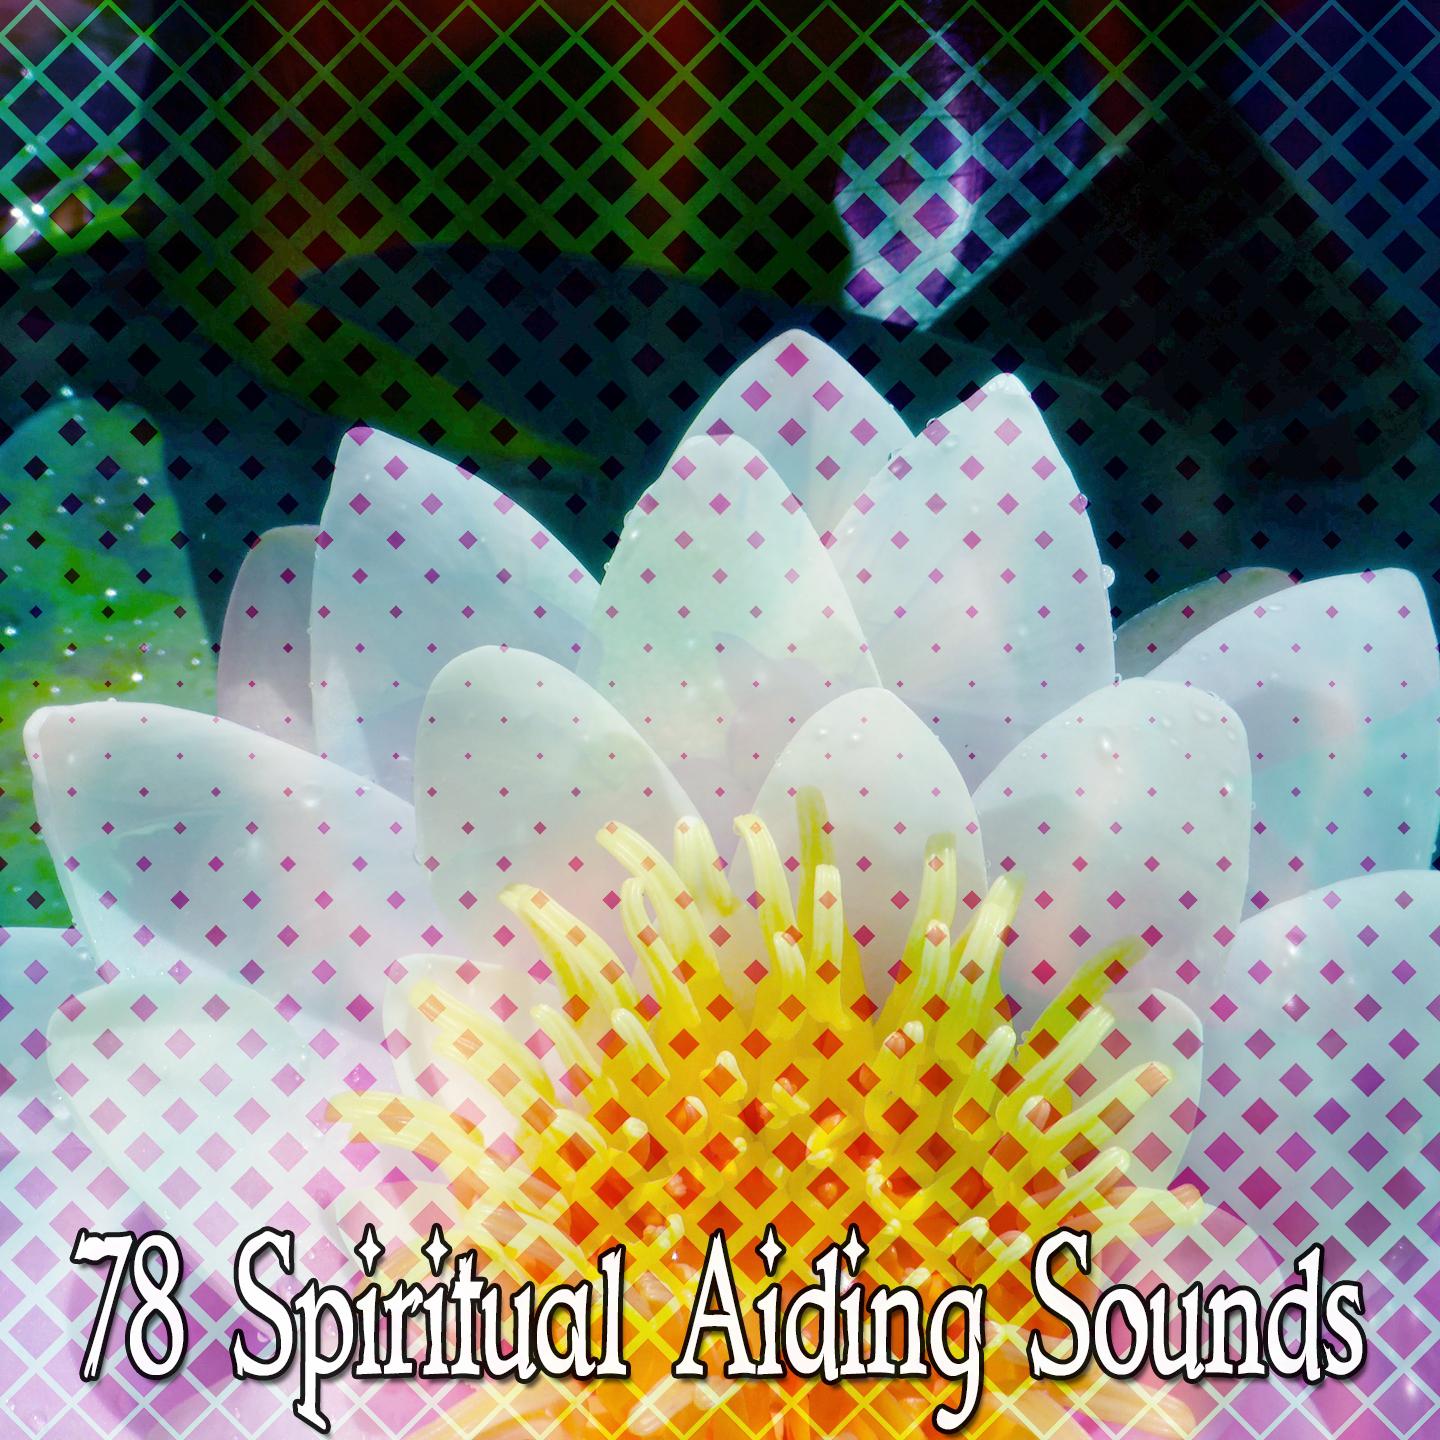 78 Spiritual Aiding Sounds